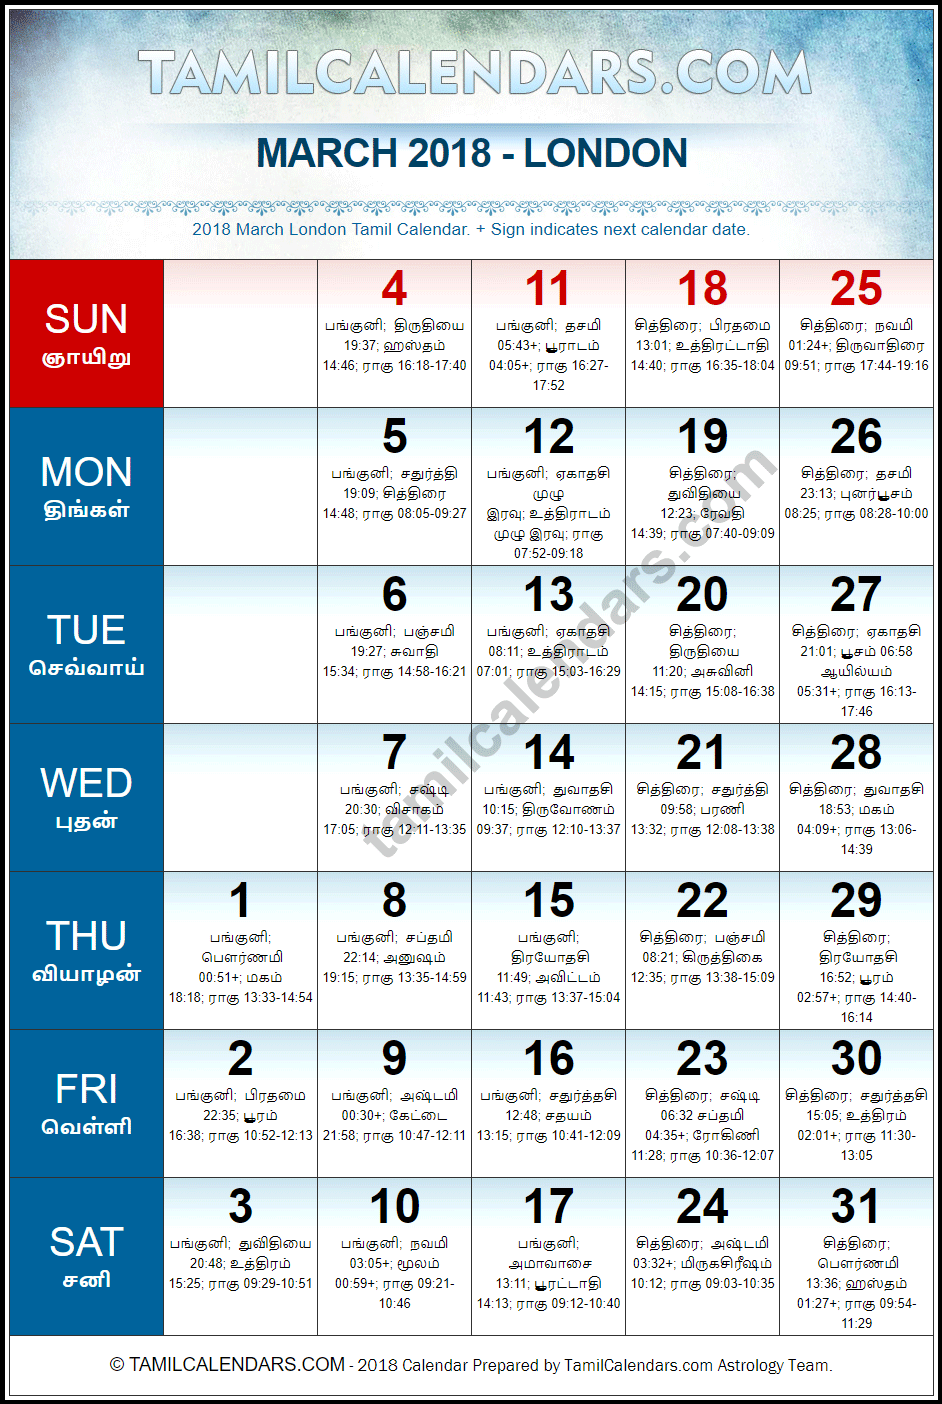 March 2018 Tamil Calendar for London, UK